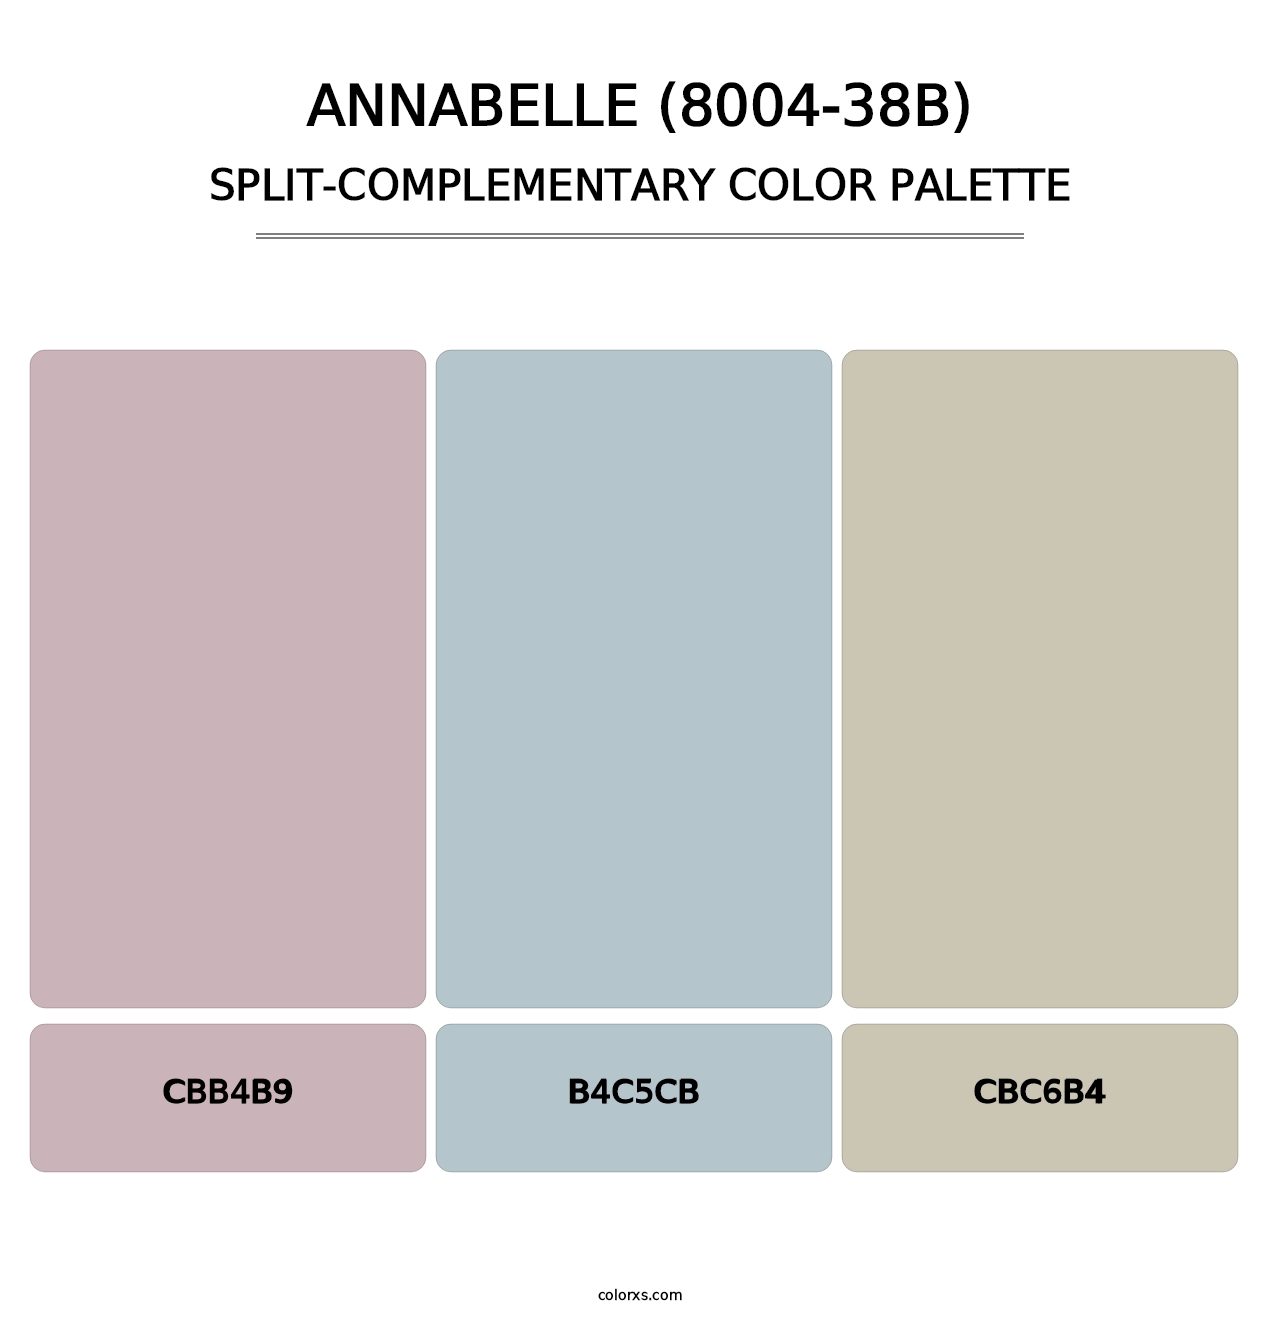 Annabelle (8004-38B) - Split-Complementary Color Palette